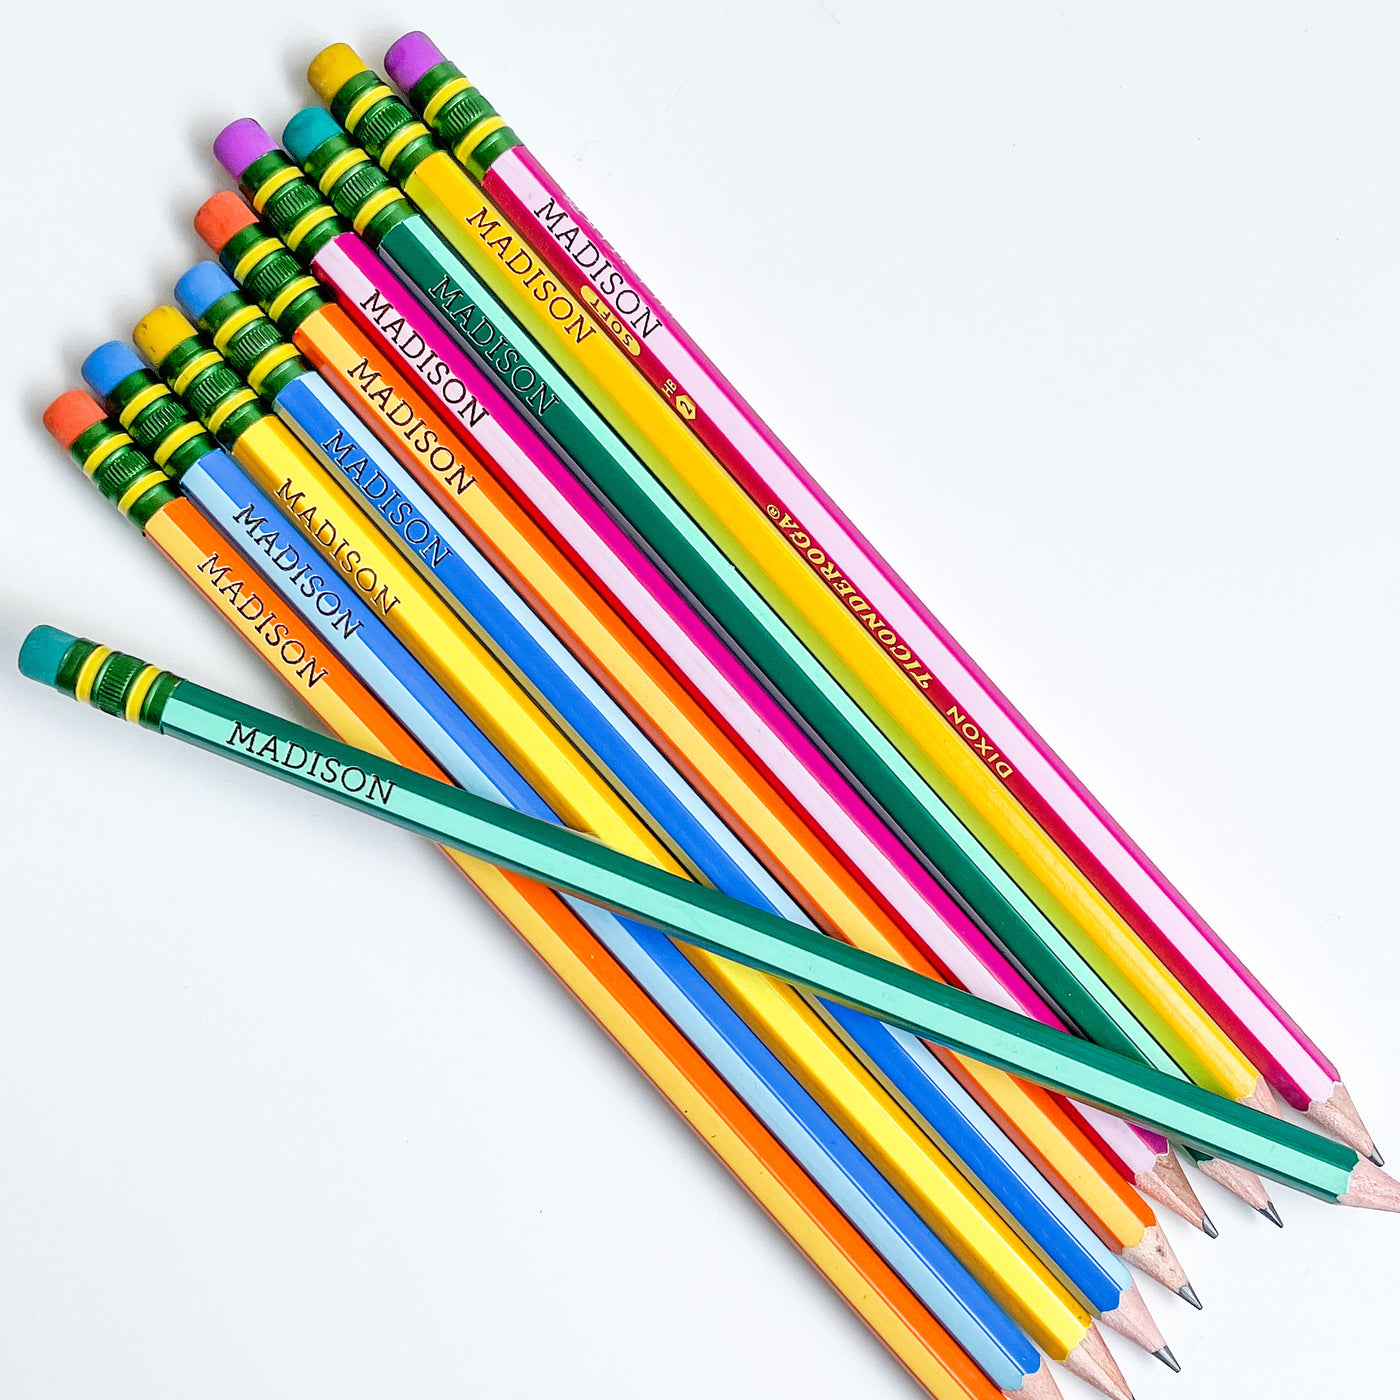 You Pick - Custom Pencil Set – Melanin Meanings